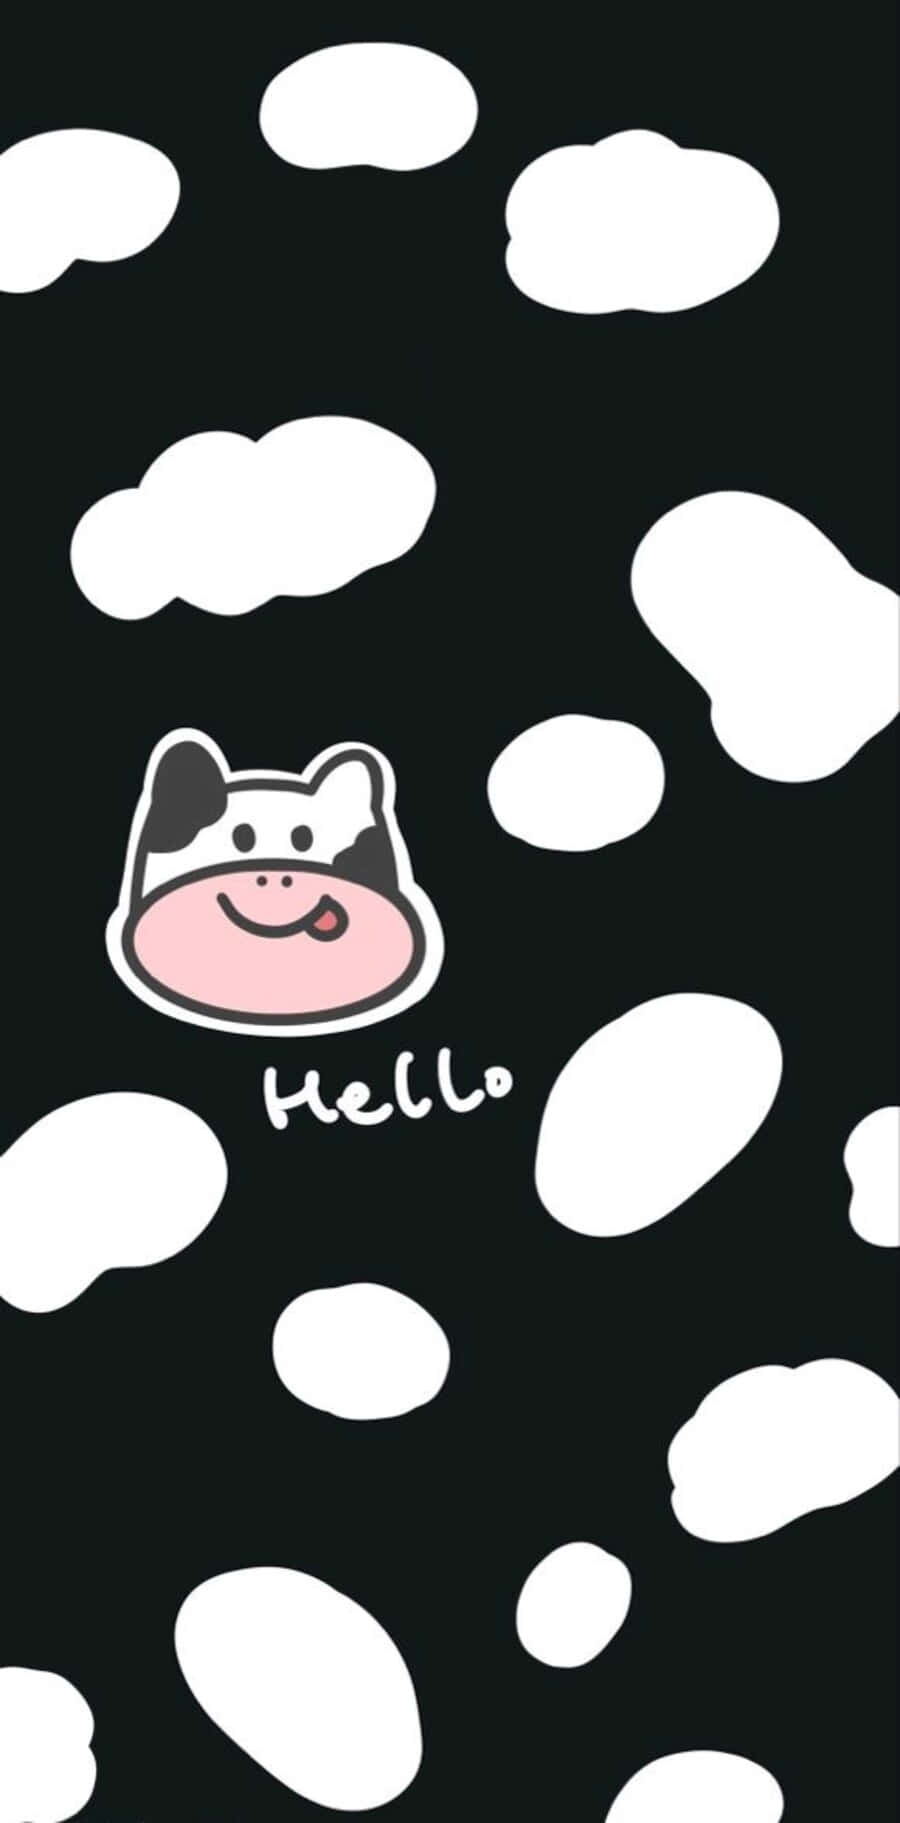 Download Adorable Kawaii Cute Cow Illustration Wallpaper